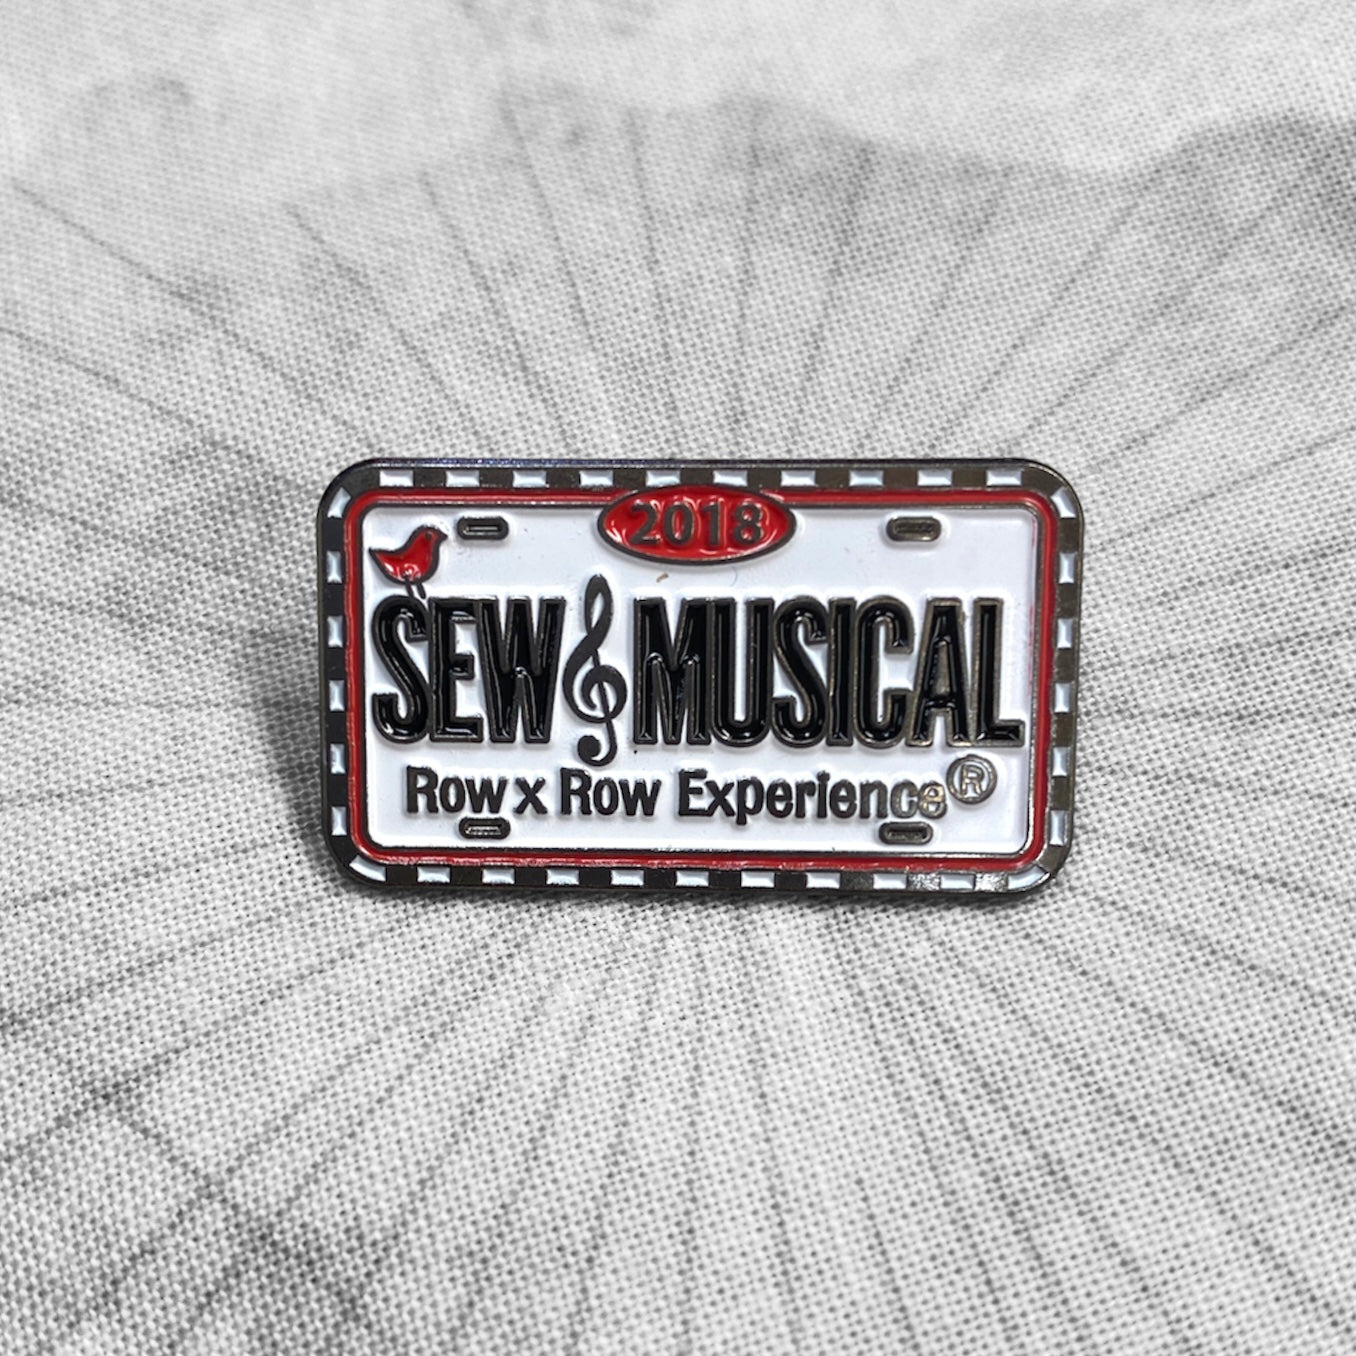 2018 Sew Musical FabricPlate Pin